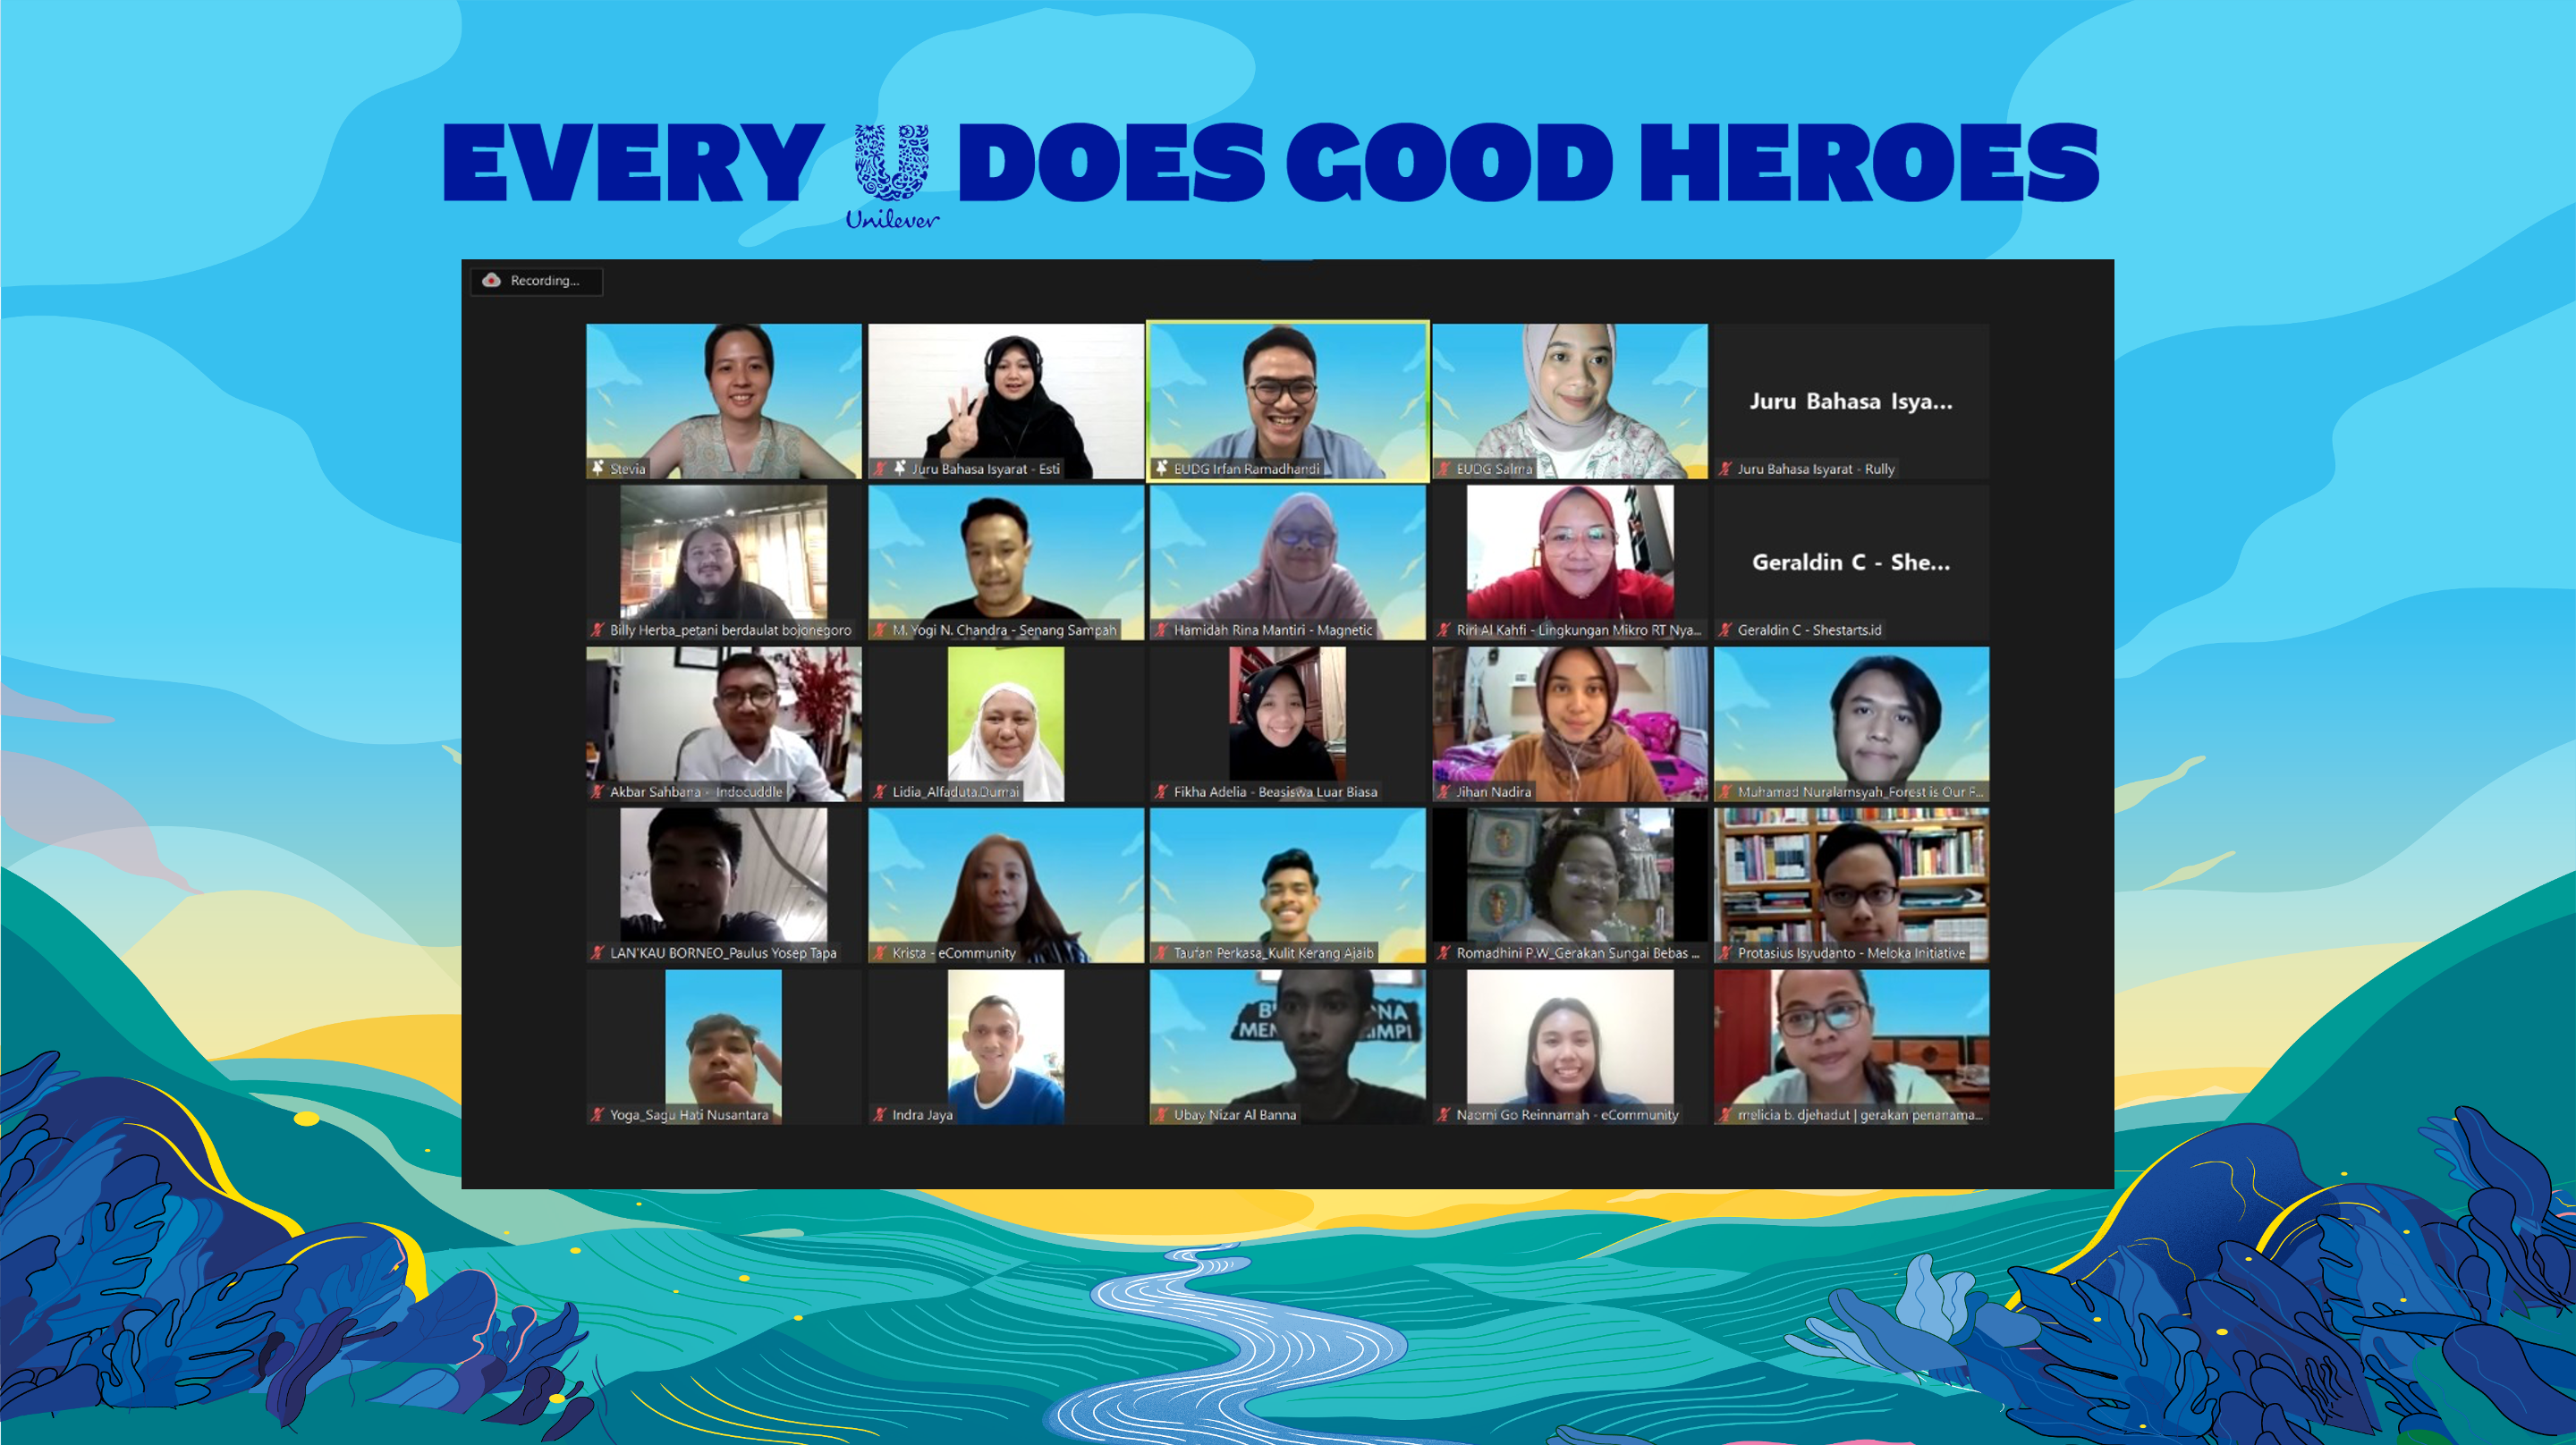 Akhiri Sesi Mentoring Every U Does Good Heroes, Unilever Indonesia Hadirkan Stevia Angesty Sebagai Mentor Penutup